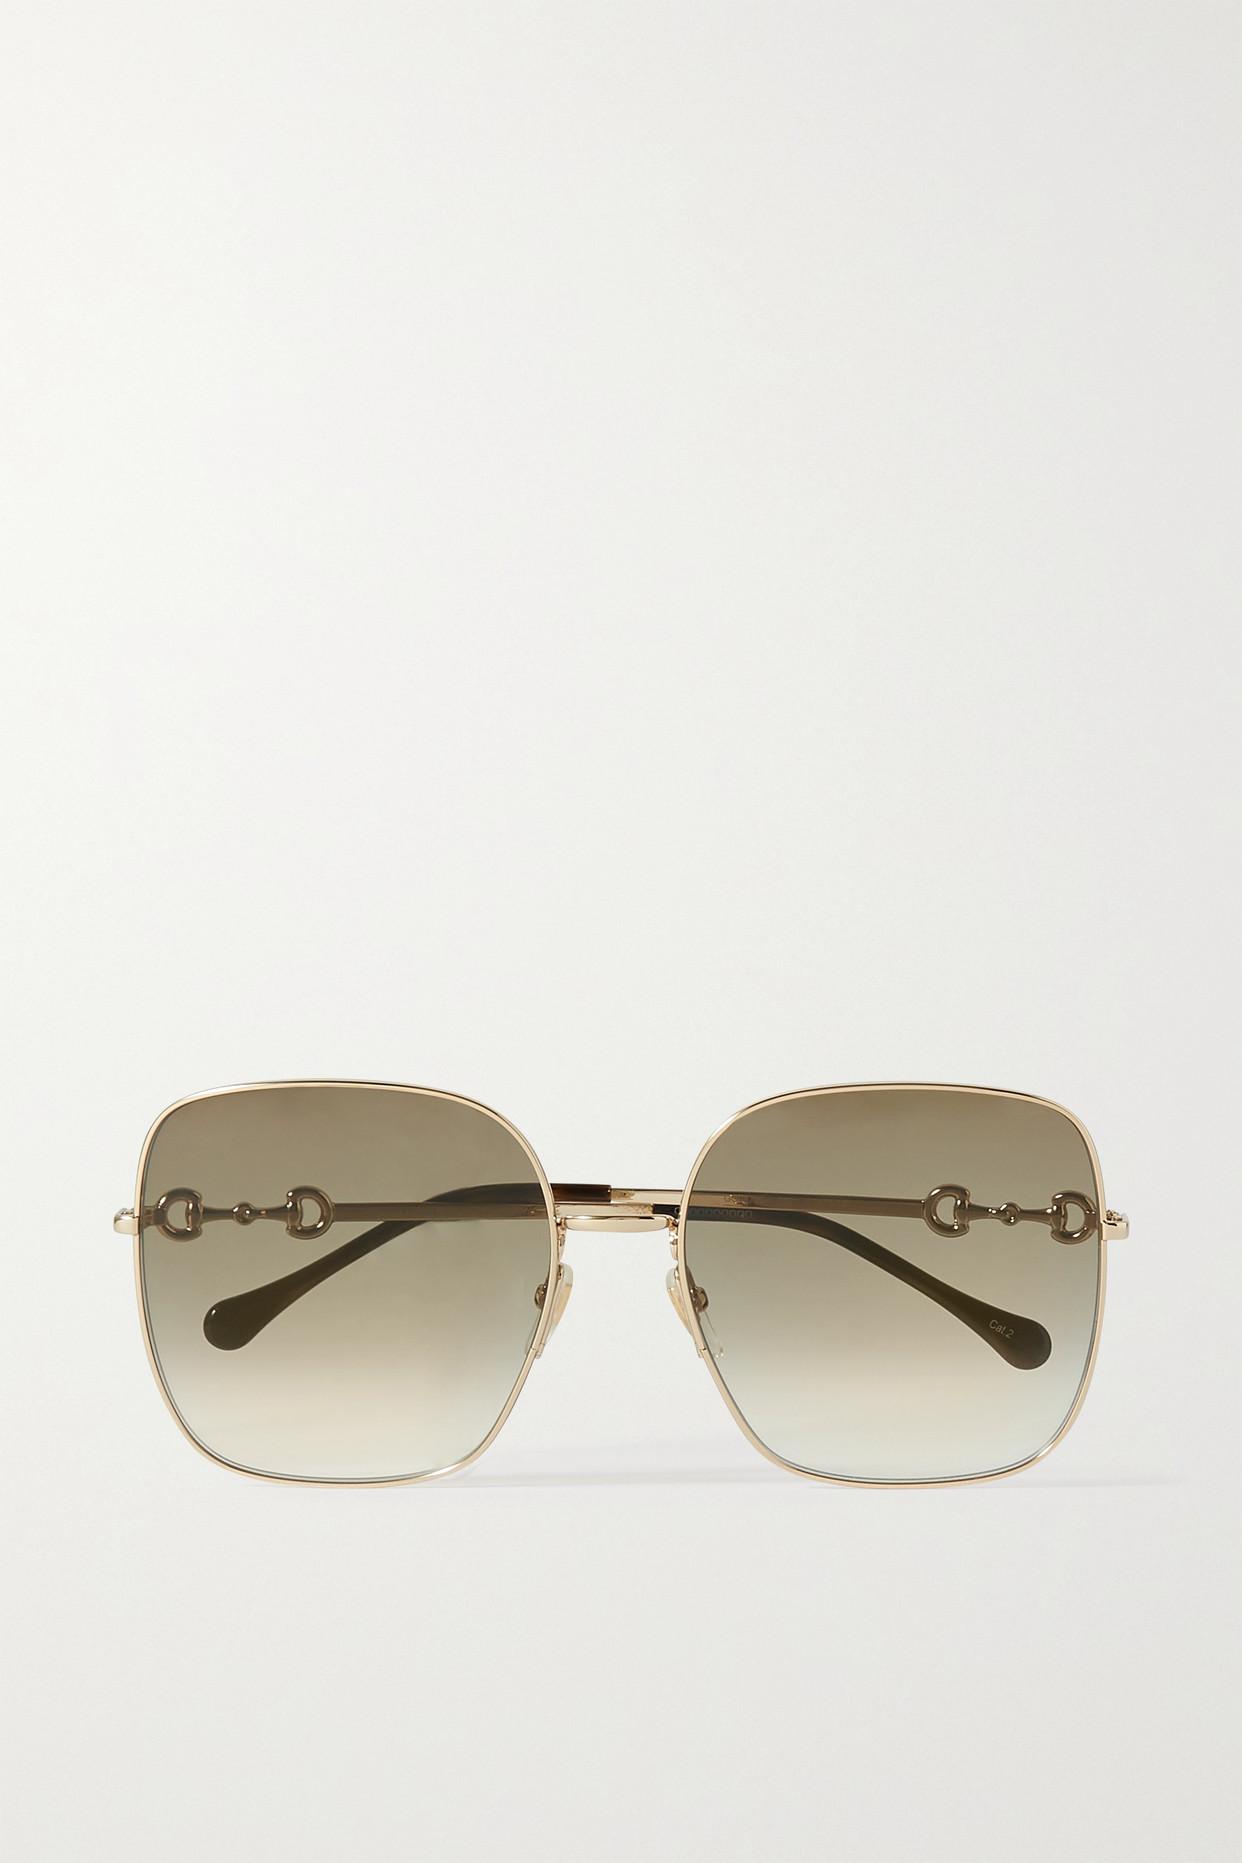 Gucci Horsebit-detailed Square-frame Gold-tone Sunglasses in Metallic |  Lyst Canada